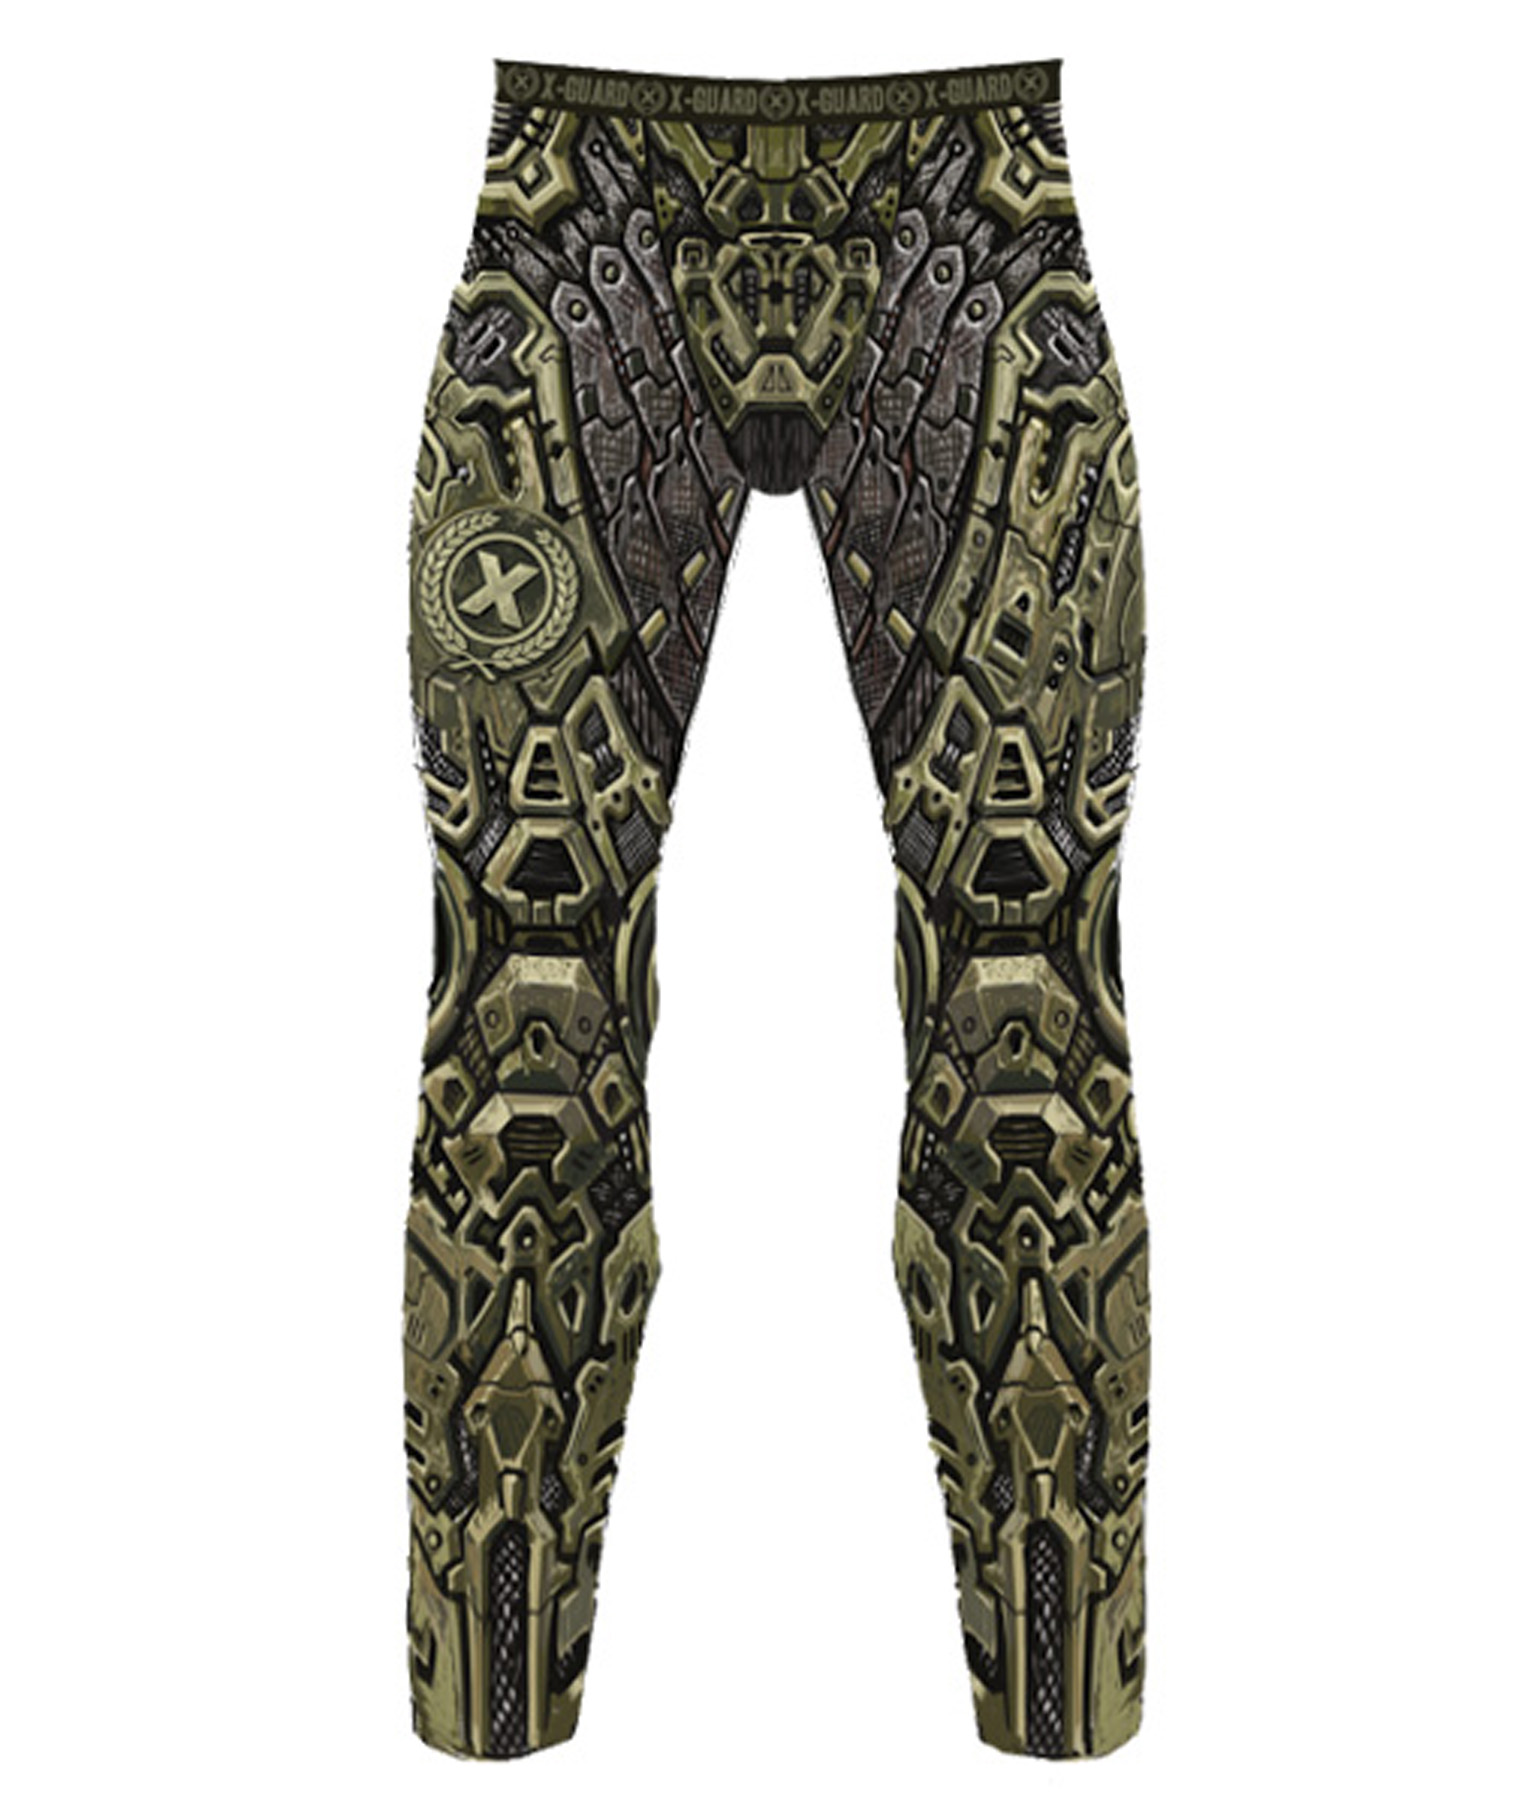 Predator Compression Pants (SPATS) – X-Guard Brand: Brazilian Jiu